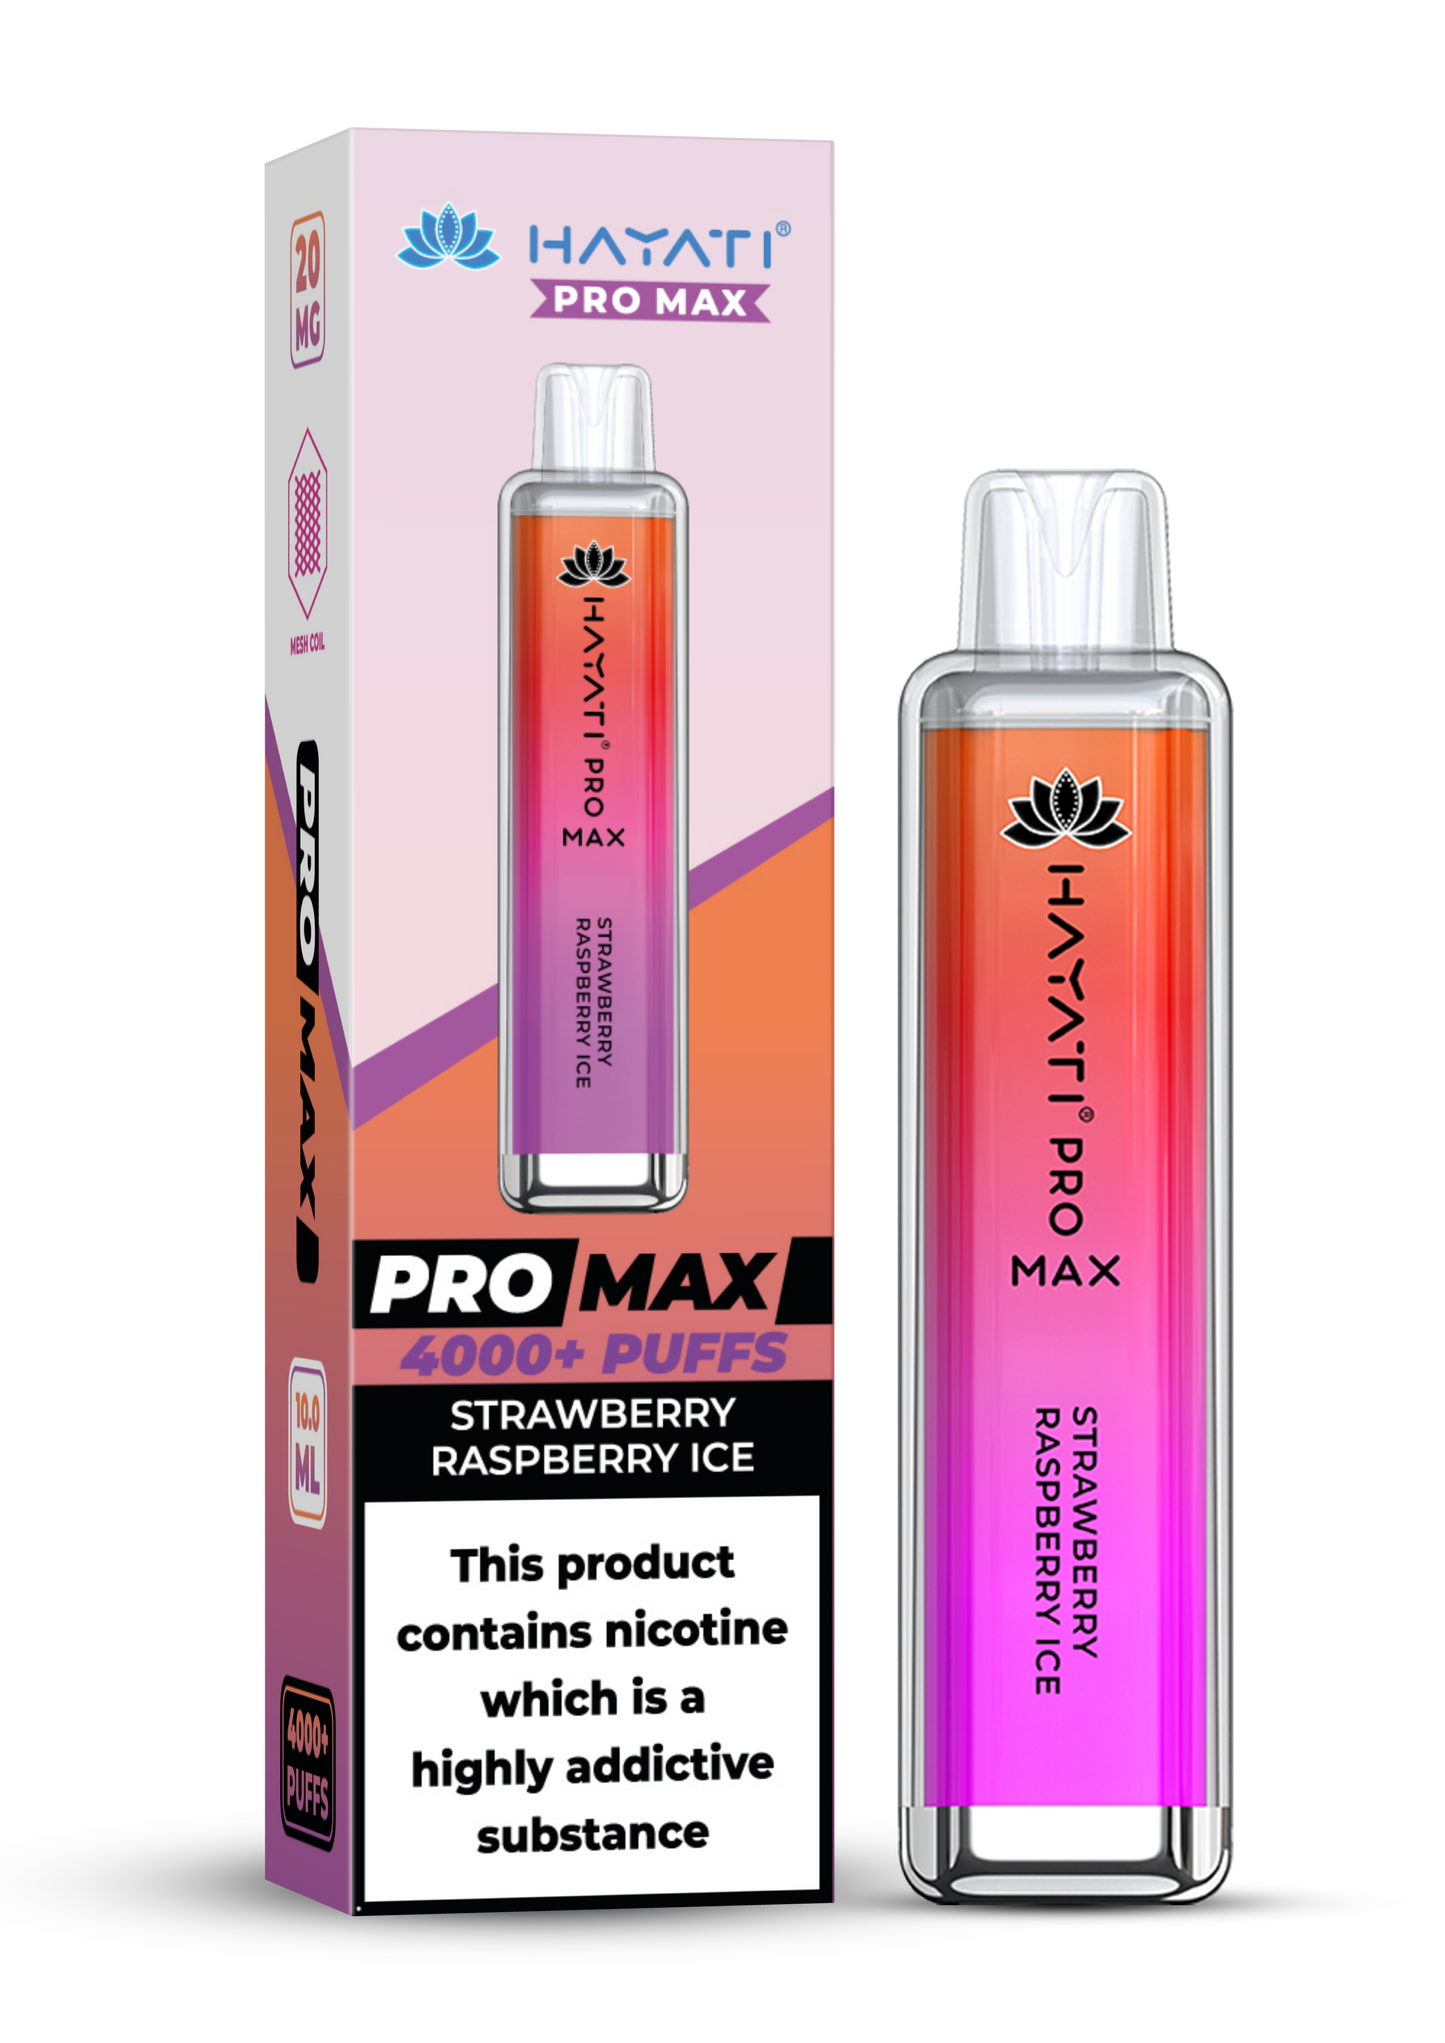 STRAWBERRY RASPBERRY ICE Hayati® Pro Max 4000+ 10 BOX